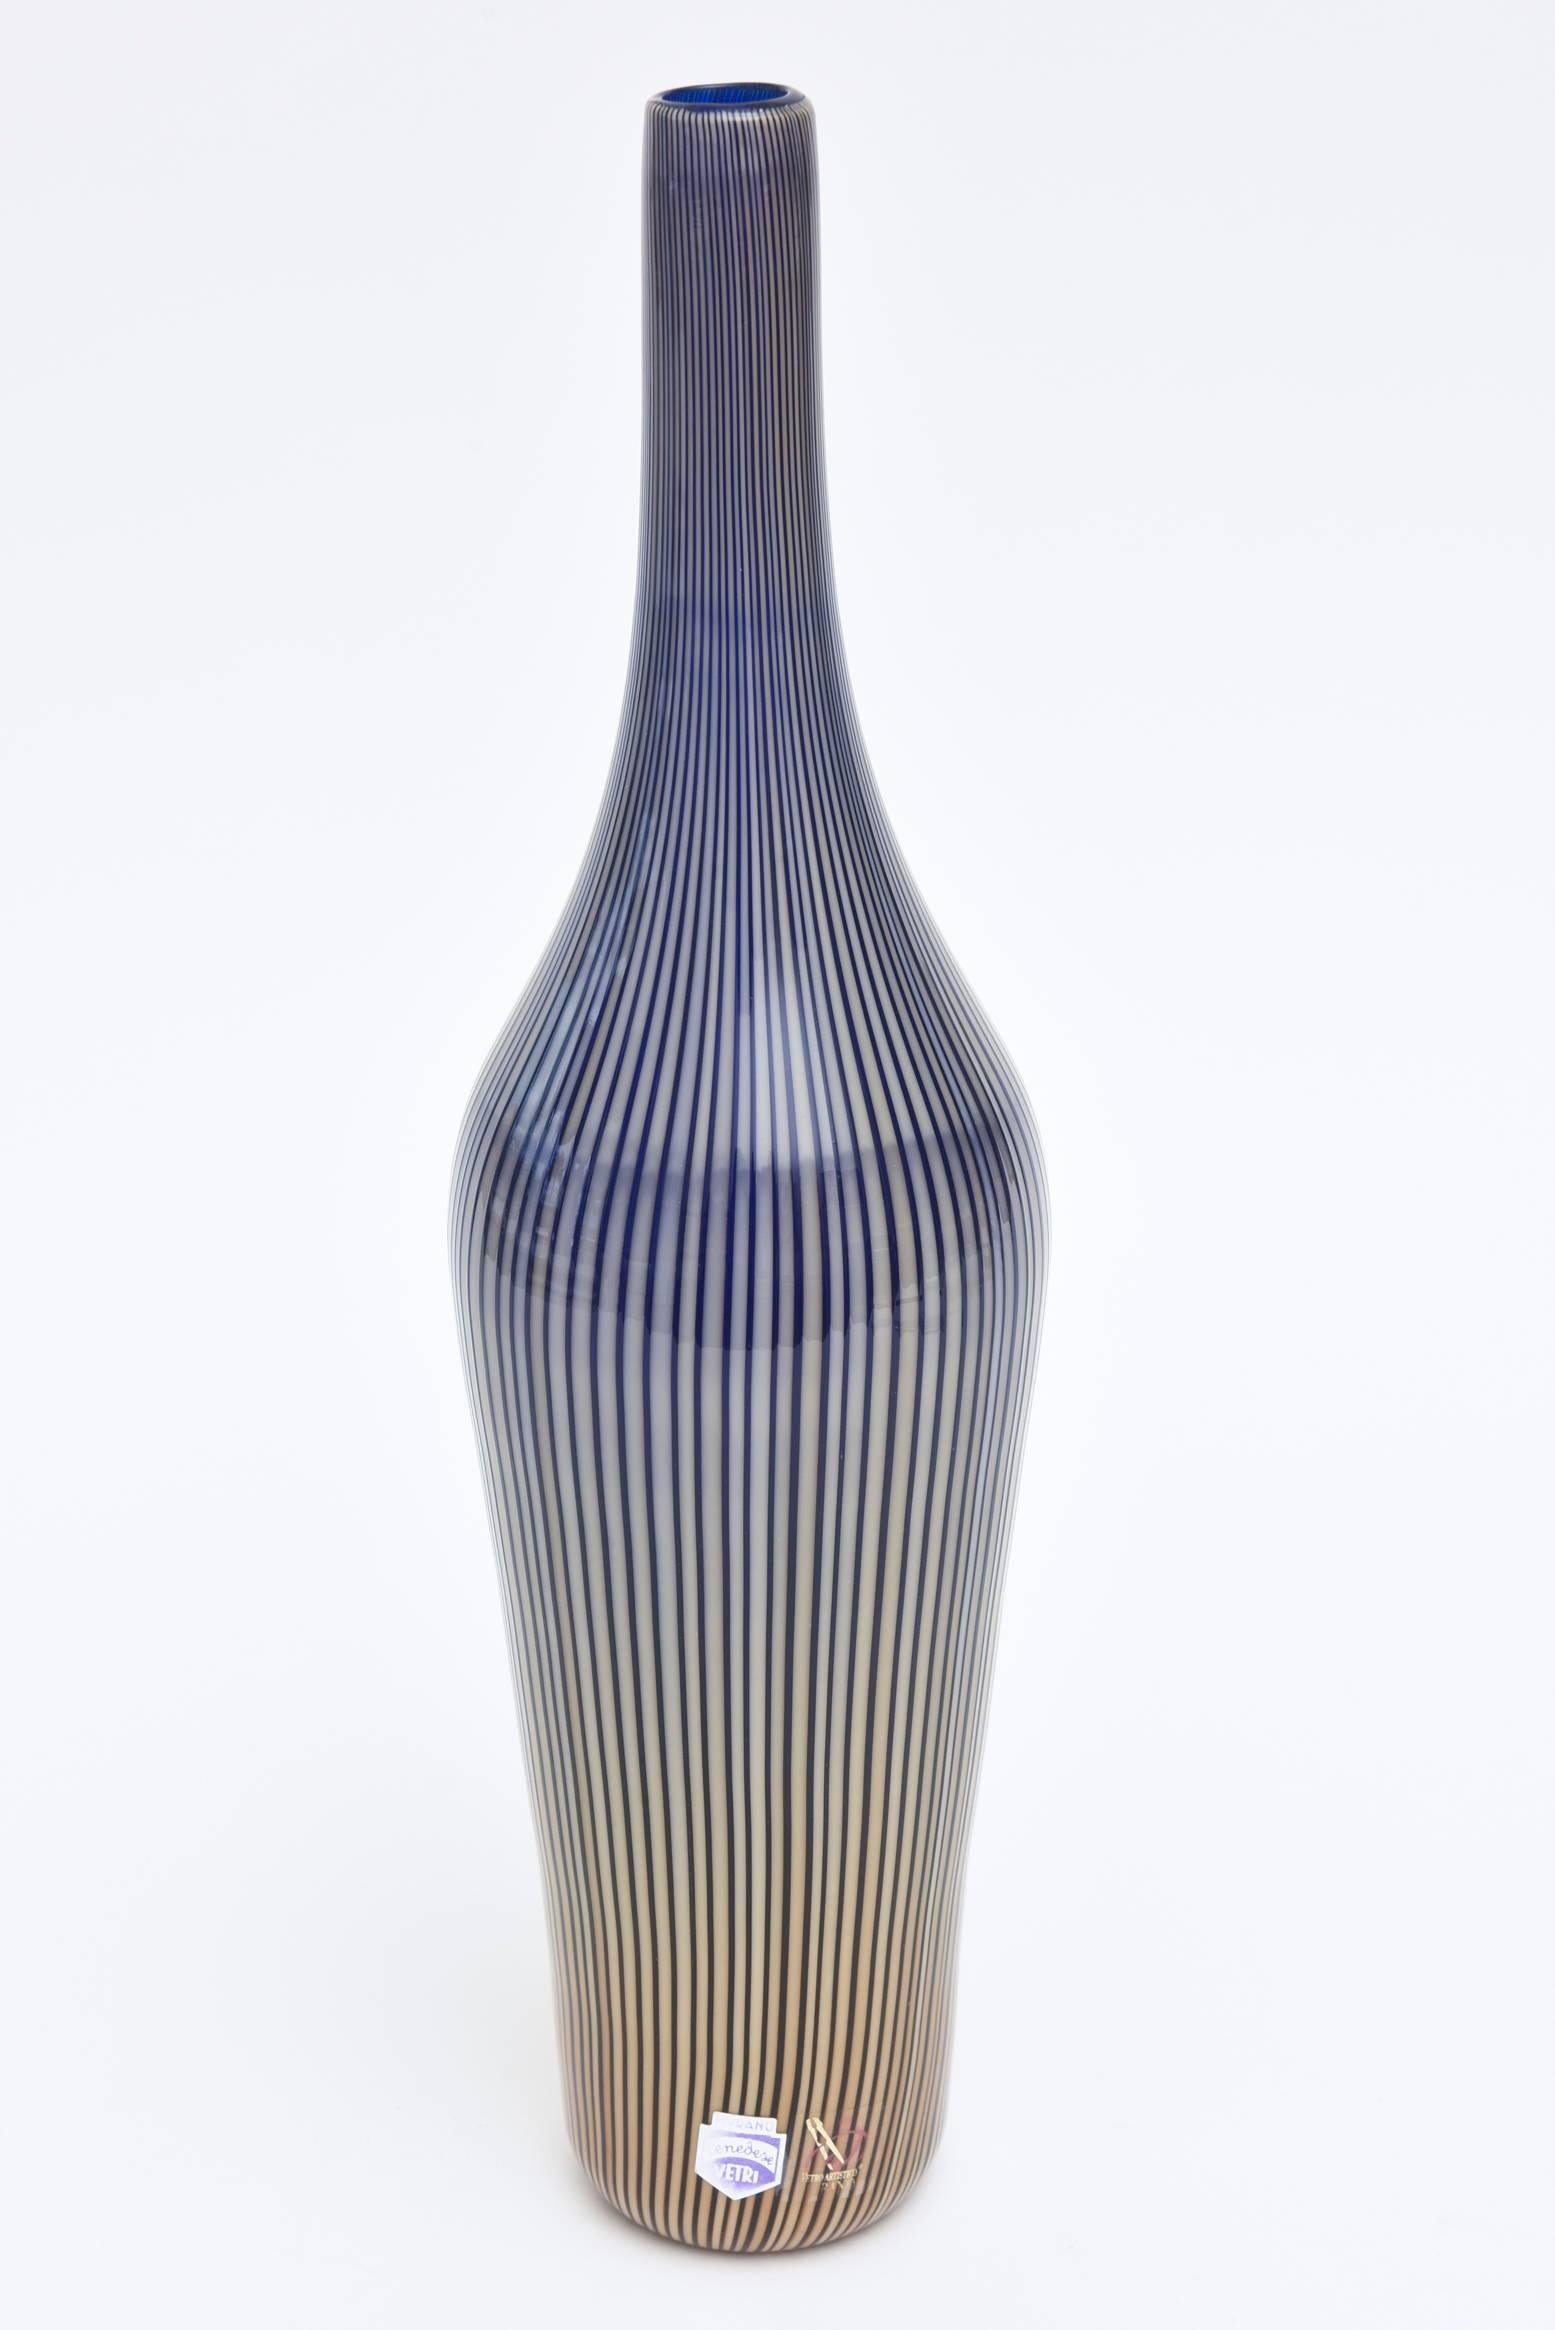 Murano Cenedese Striped Bottle, Vessel, Glass Sculpture 1